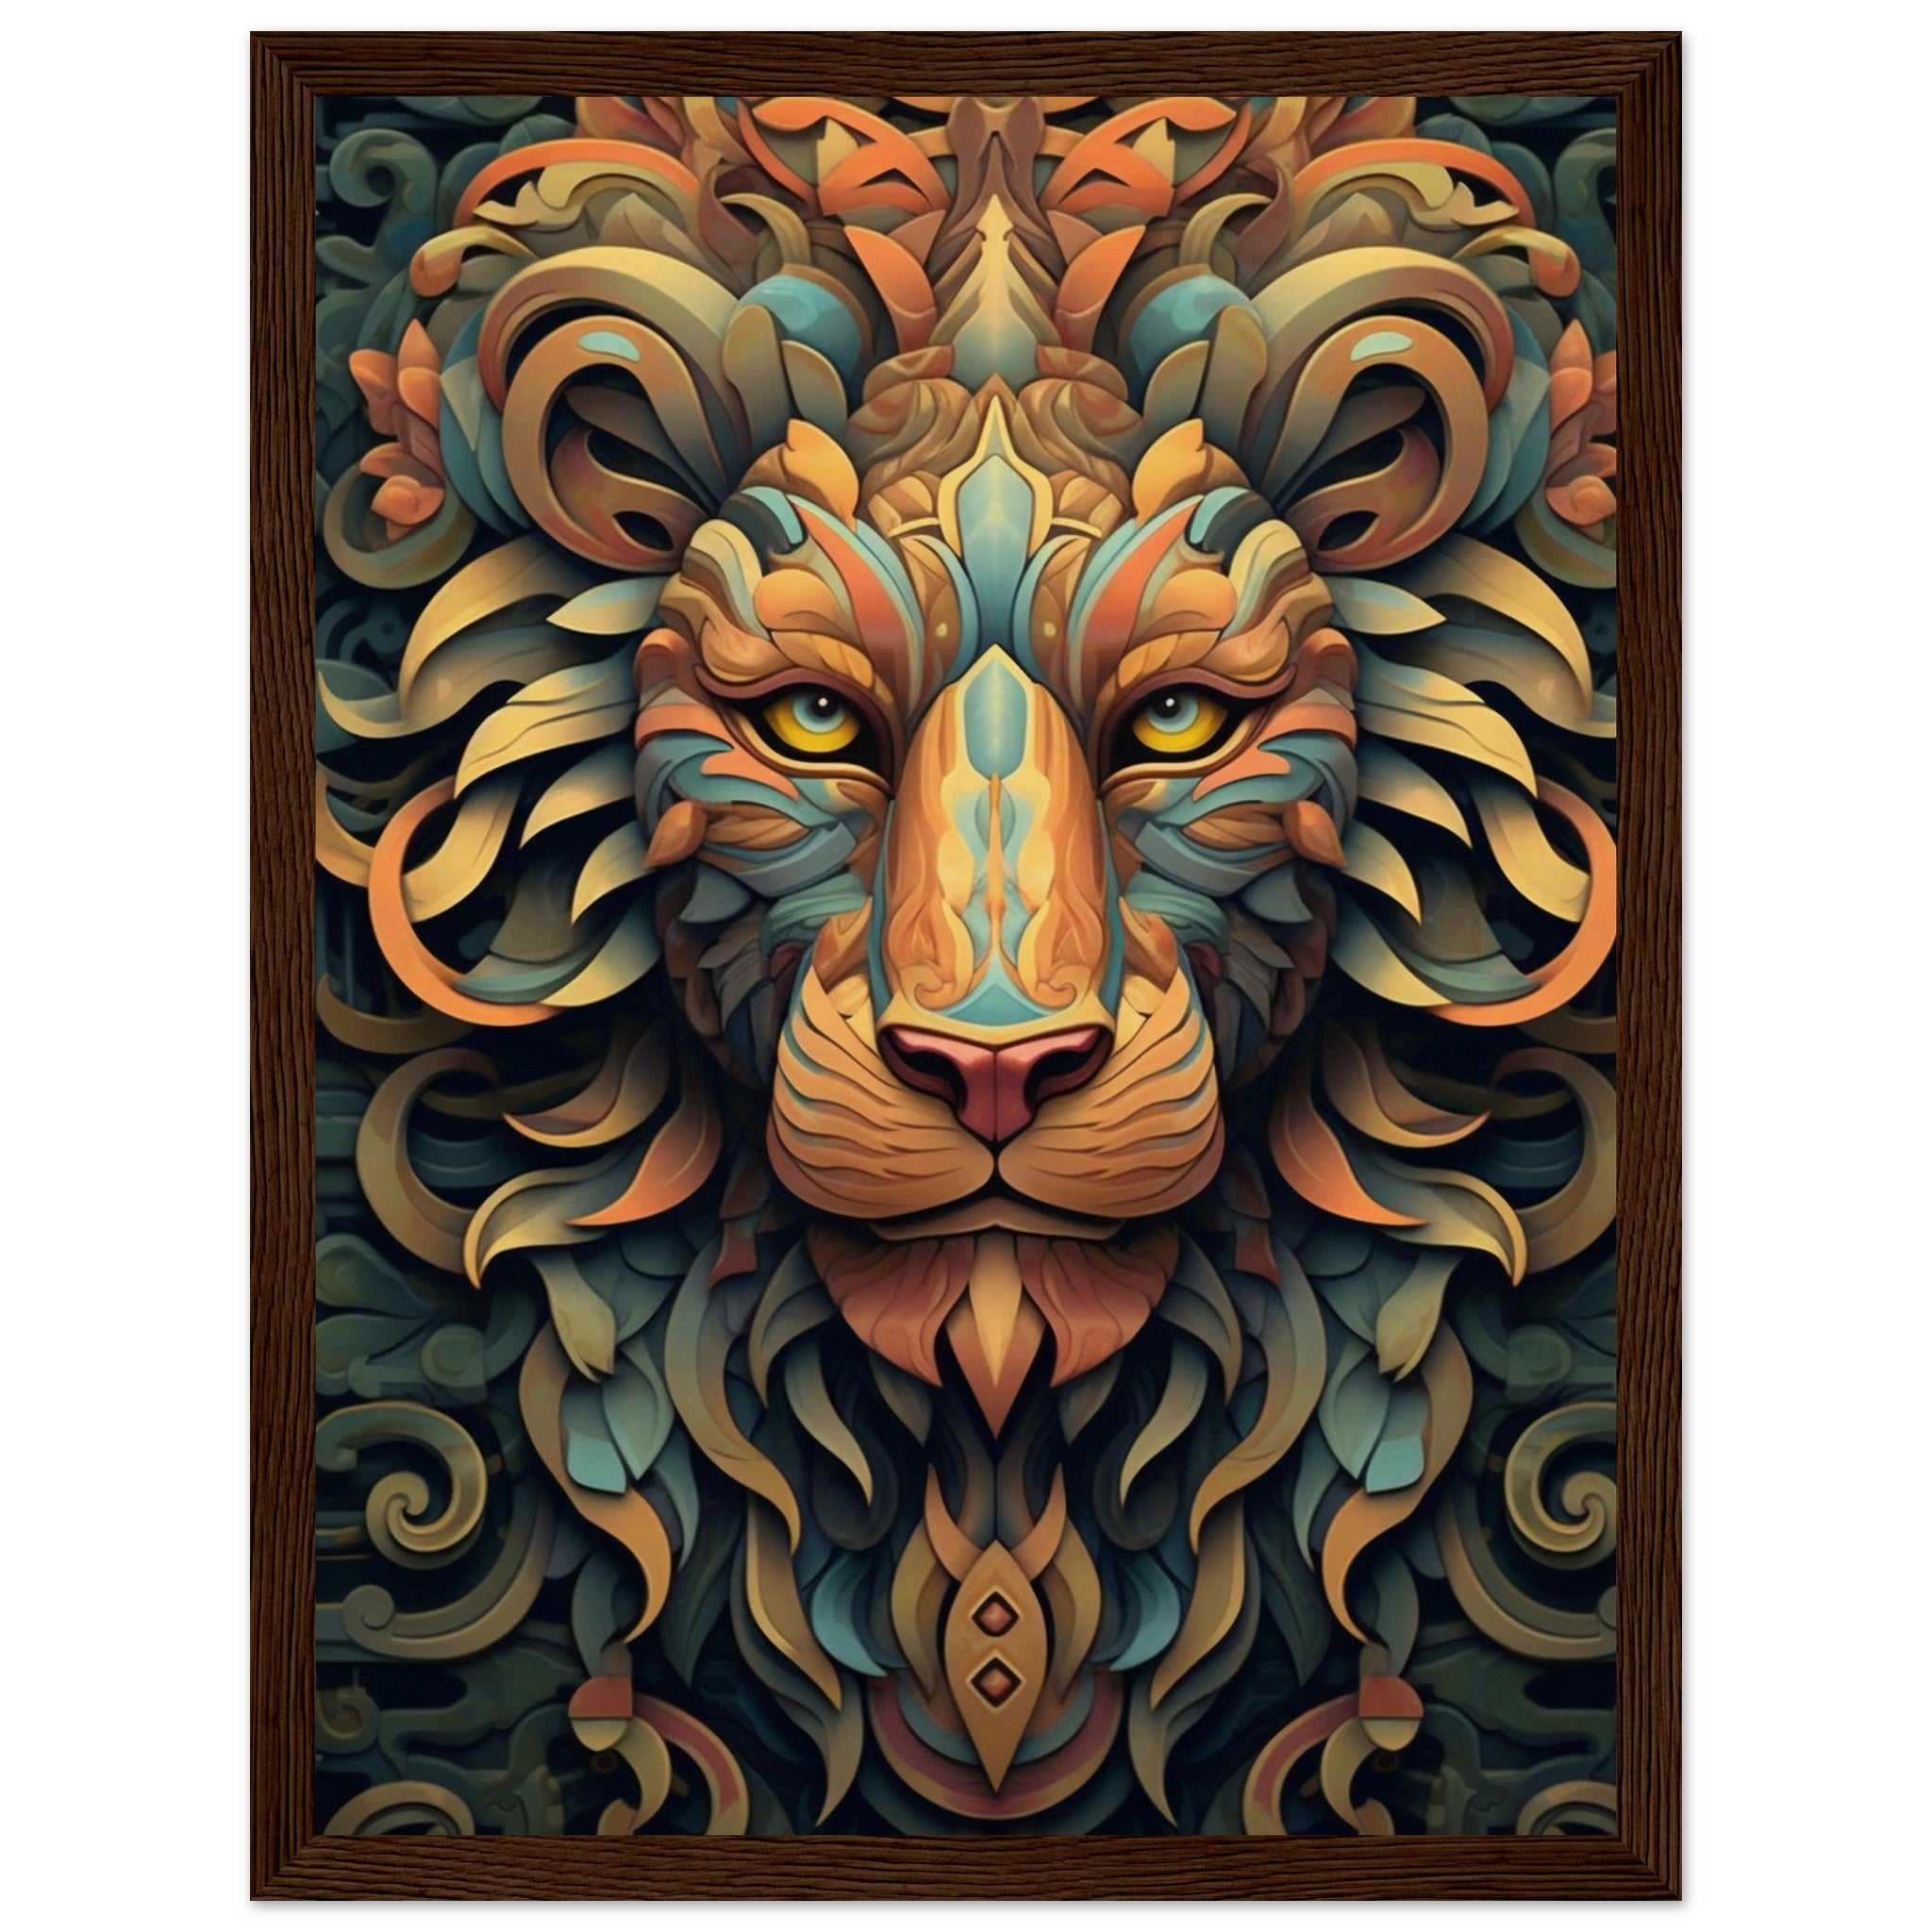 Macro Geometric Lion face - immersiarts